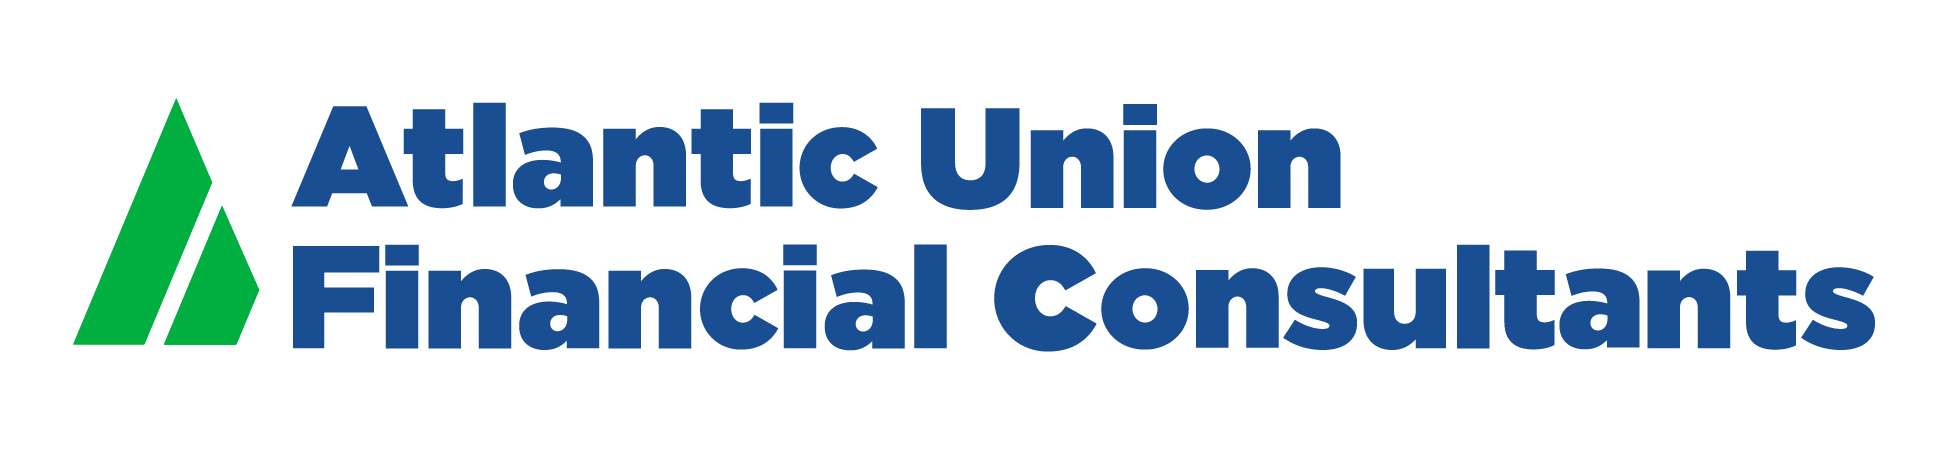 Atlantic Union Financial Consultants logo